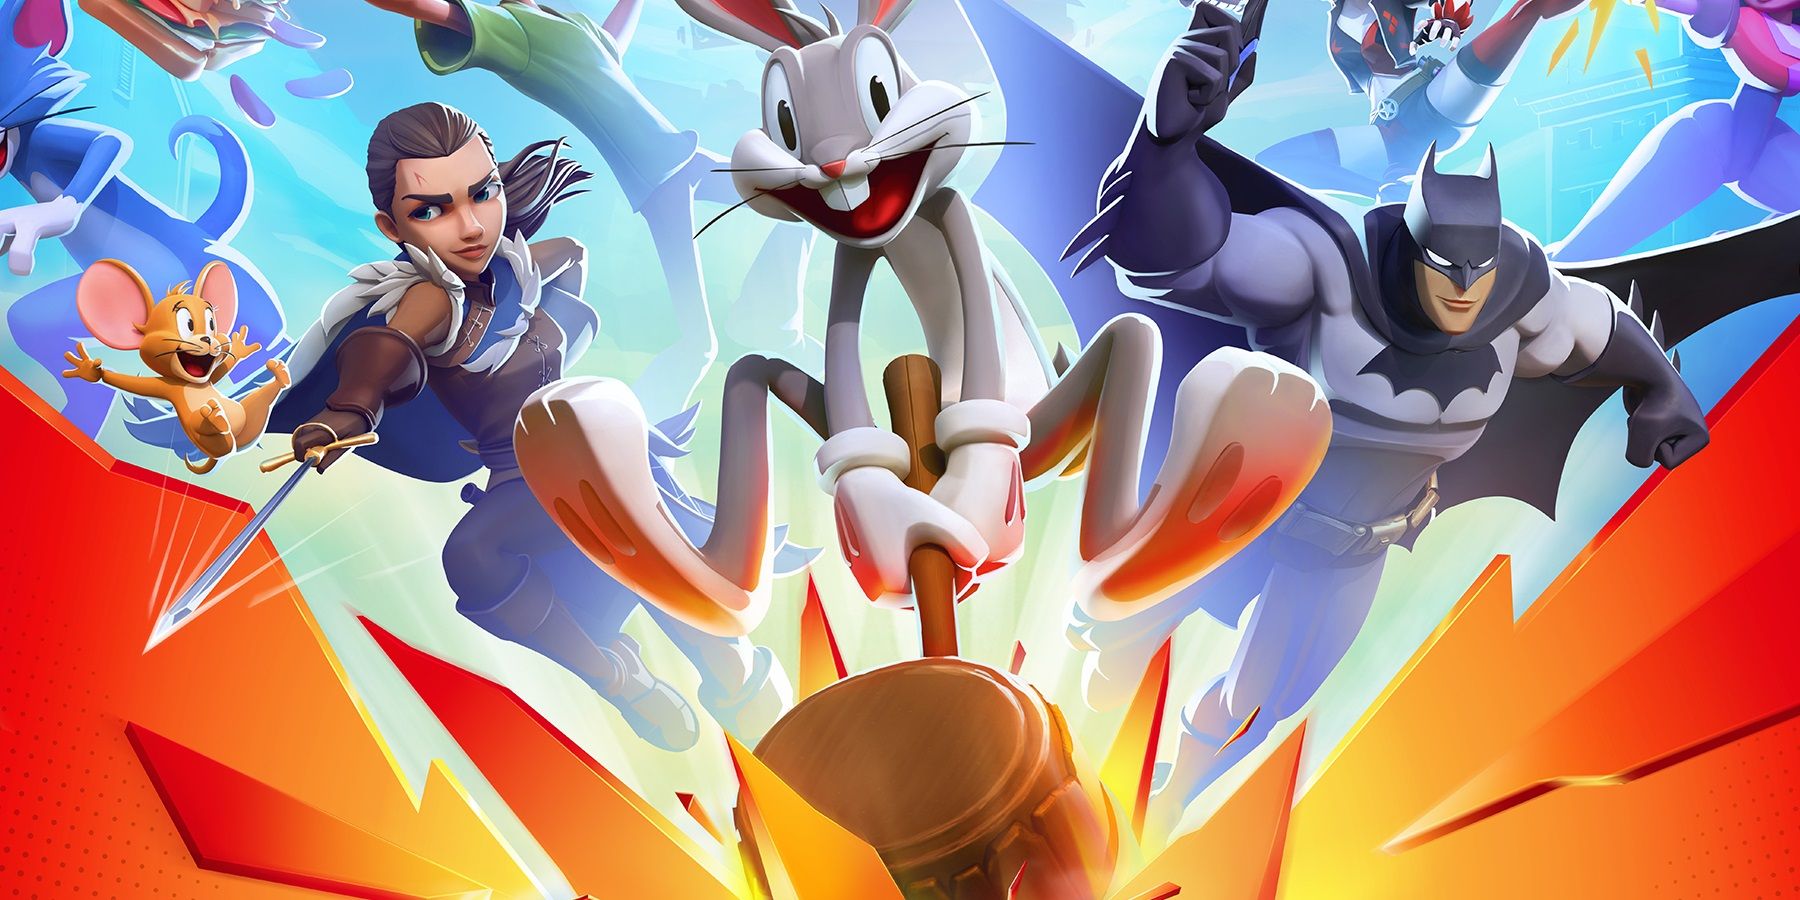 multiversus characters bugs bunny, batman, and arya stark